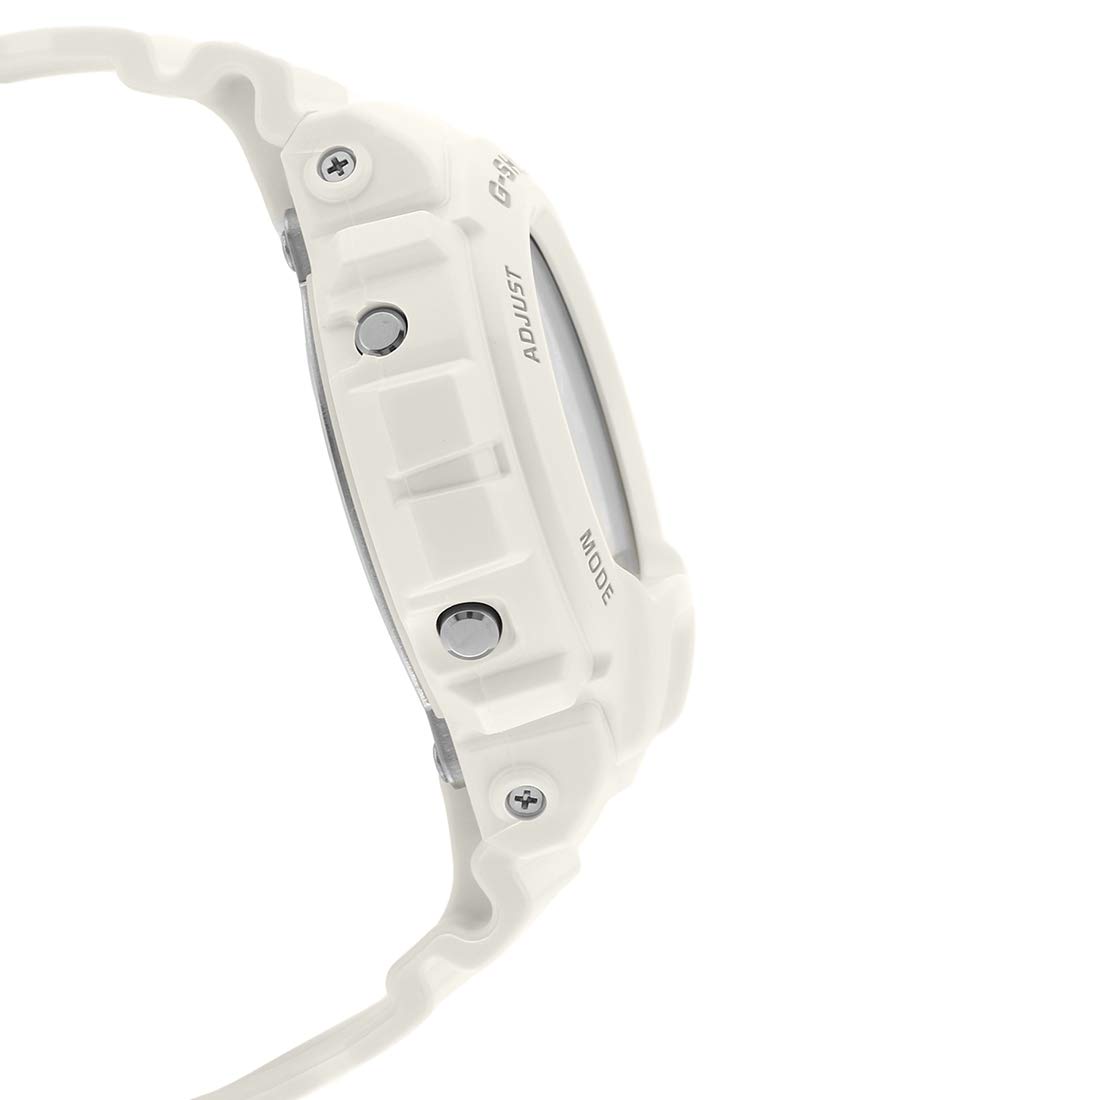 Casio G-Shock DW6900NB-7 Chronograph Digital Men's Watch (White)